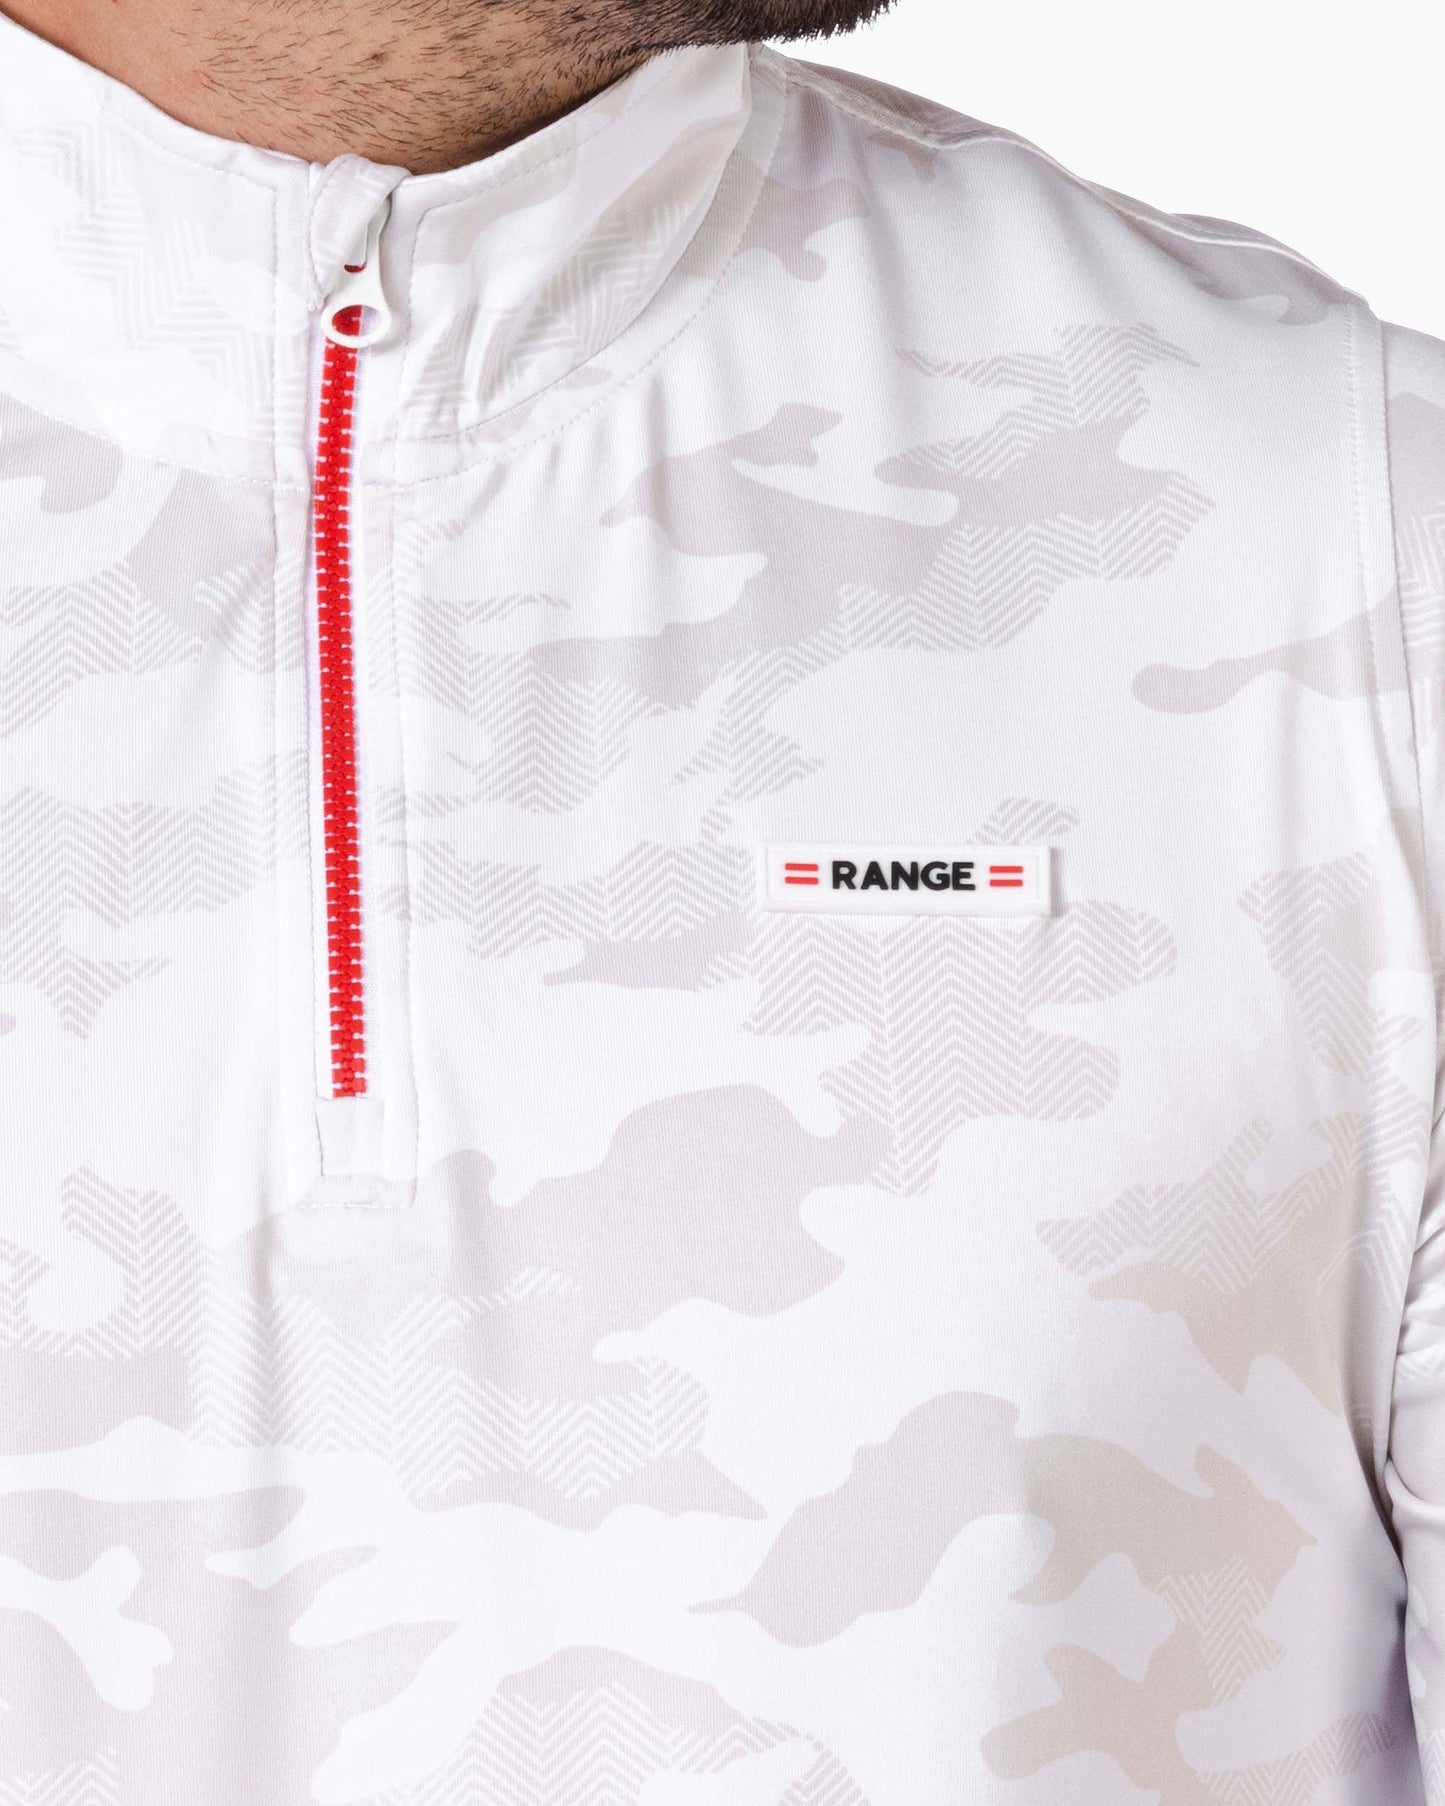 close up of range badge on pocket 